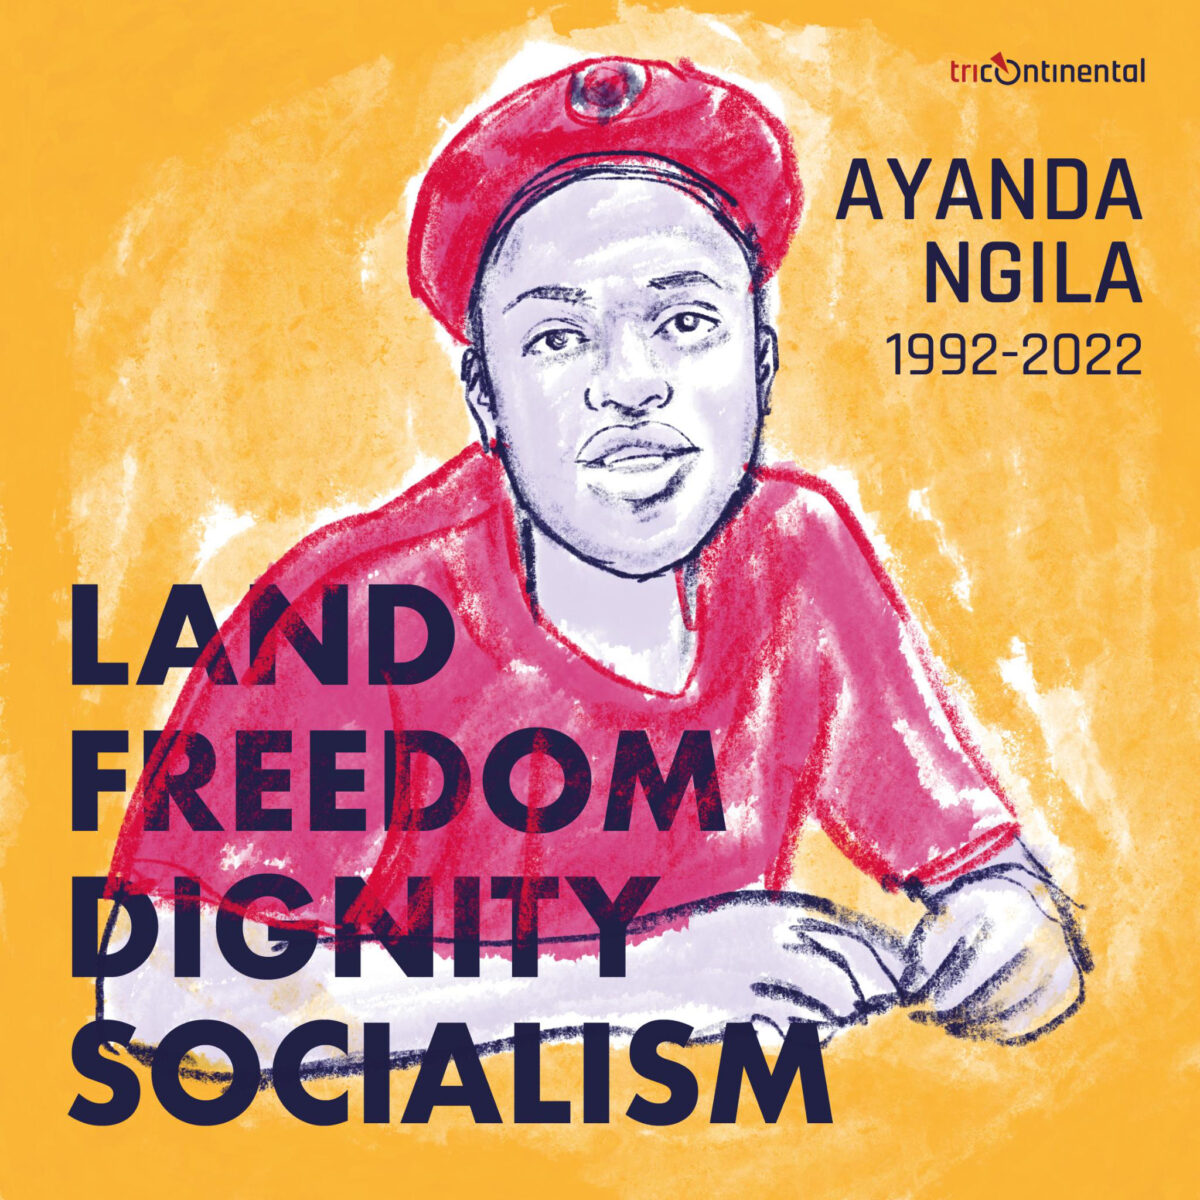 Gerechtigkeit für Ayanda Ngila